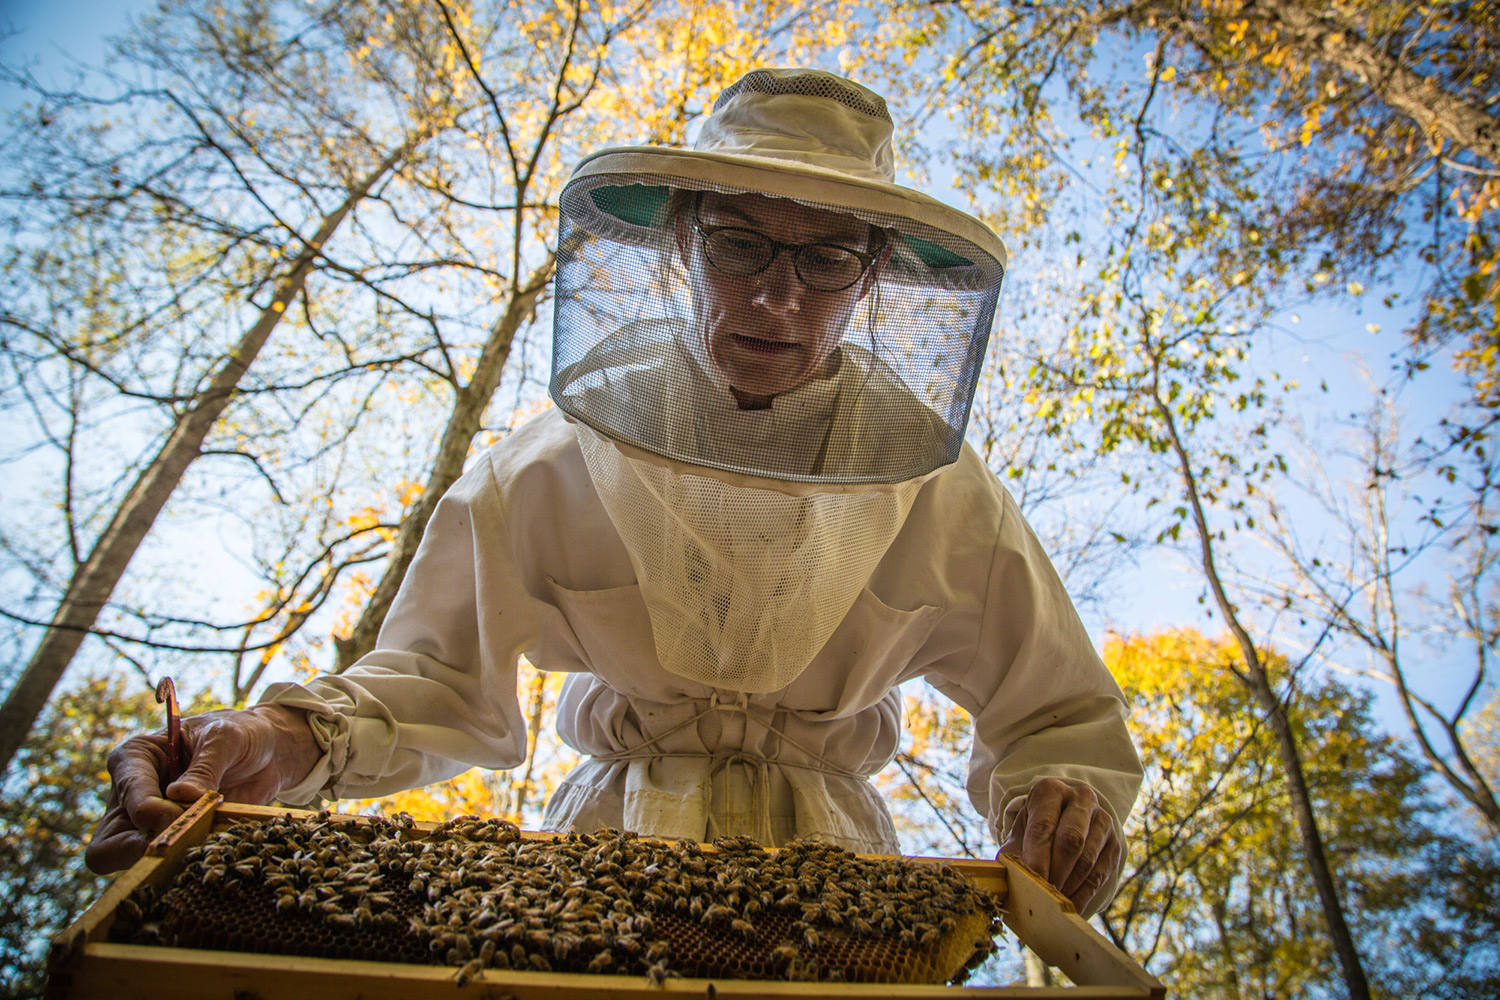 Jennier Pepper and her honeybees